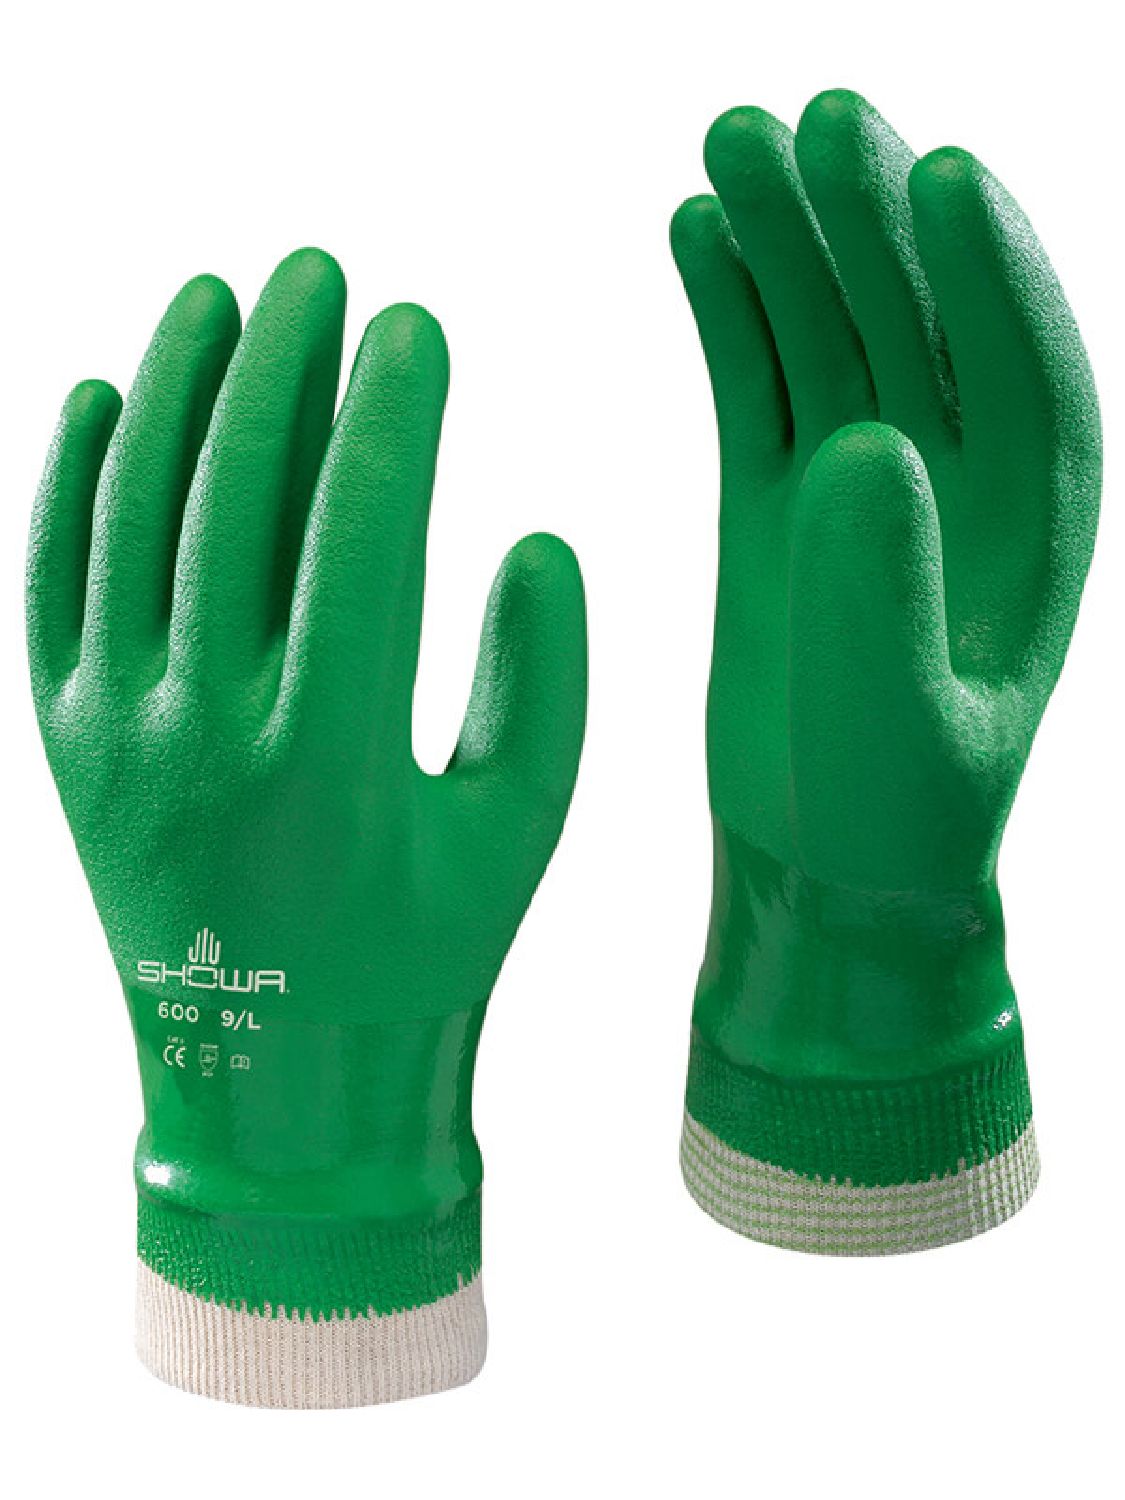 Handschuhe SHOWA 600 grün Rosenhandschuh mit PVC